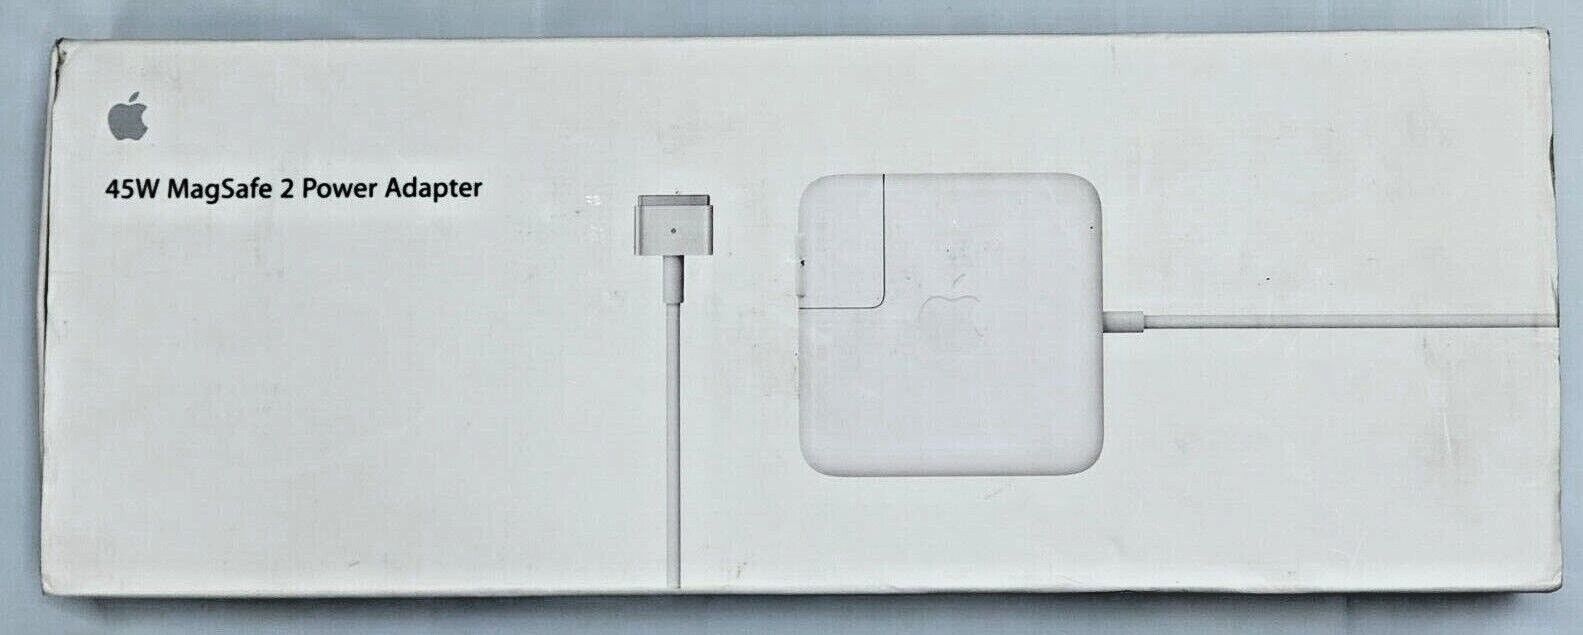 [ORIGINAL, GENUINE] Apple 45W or 85W Series 2 Power Adapter for Macbook Pro